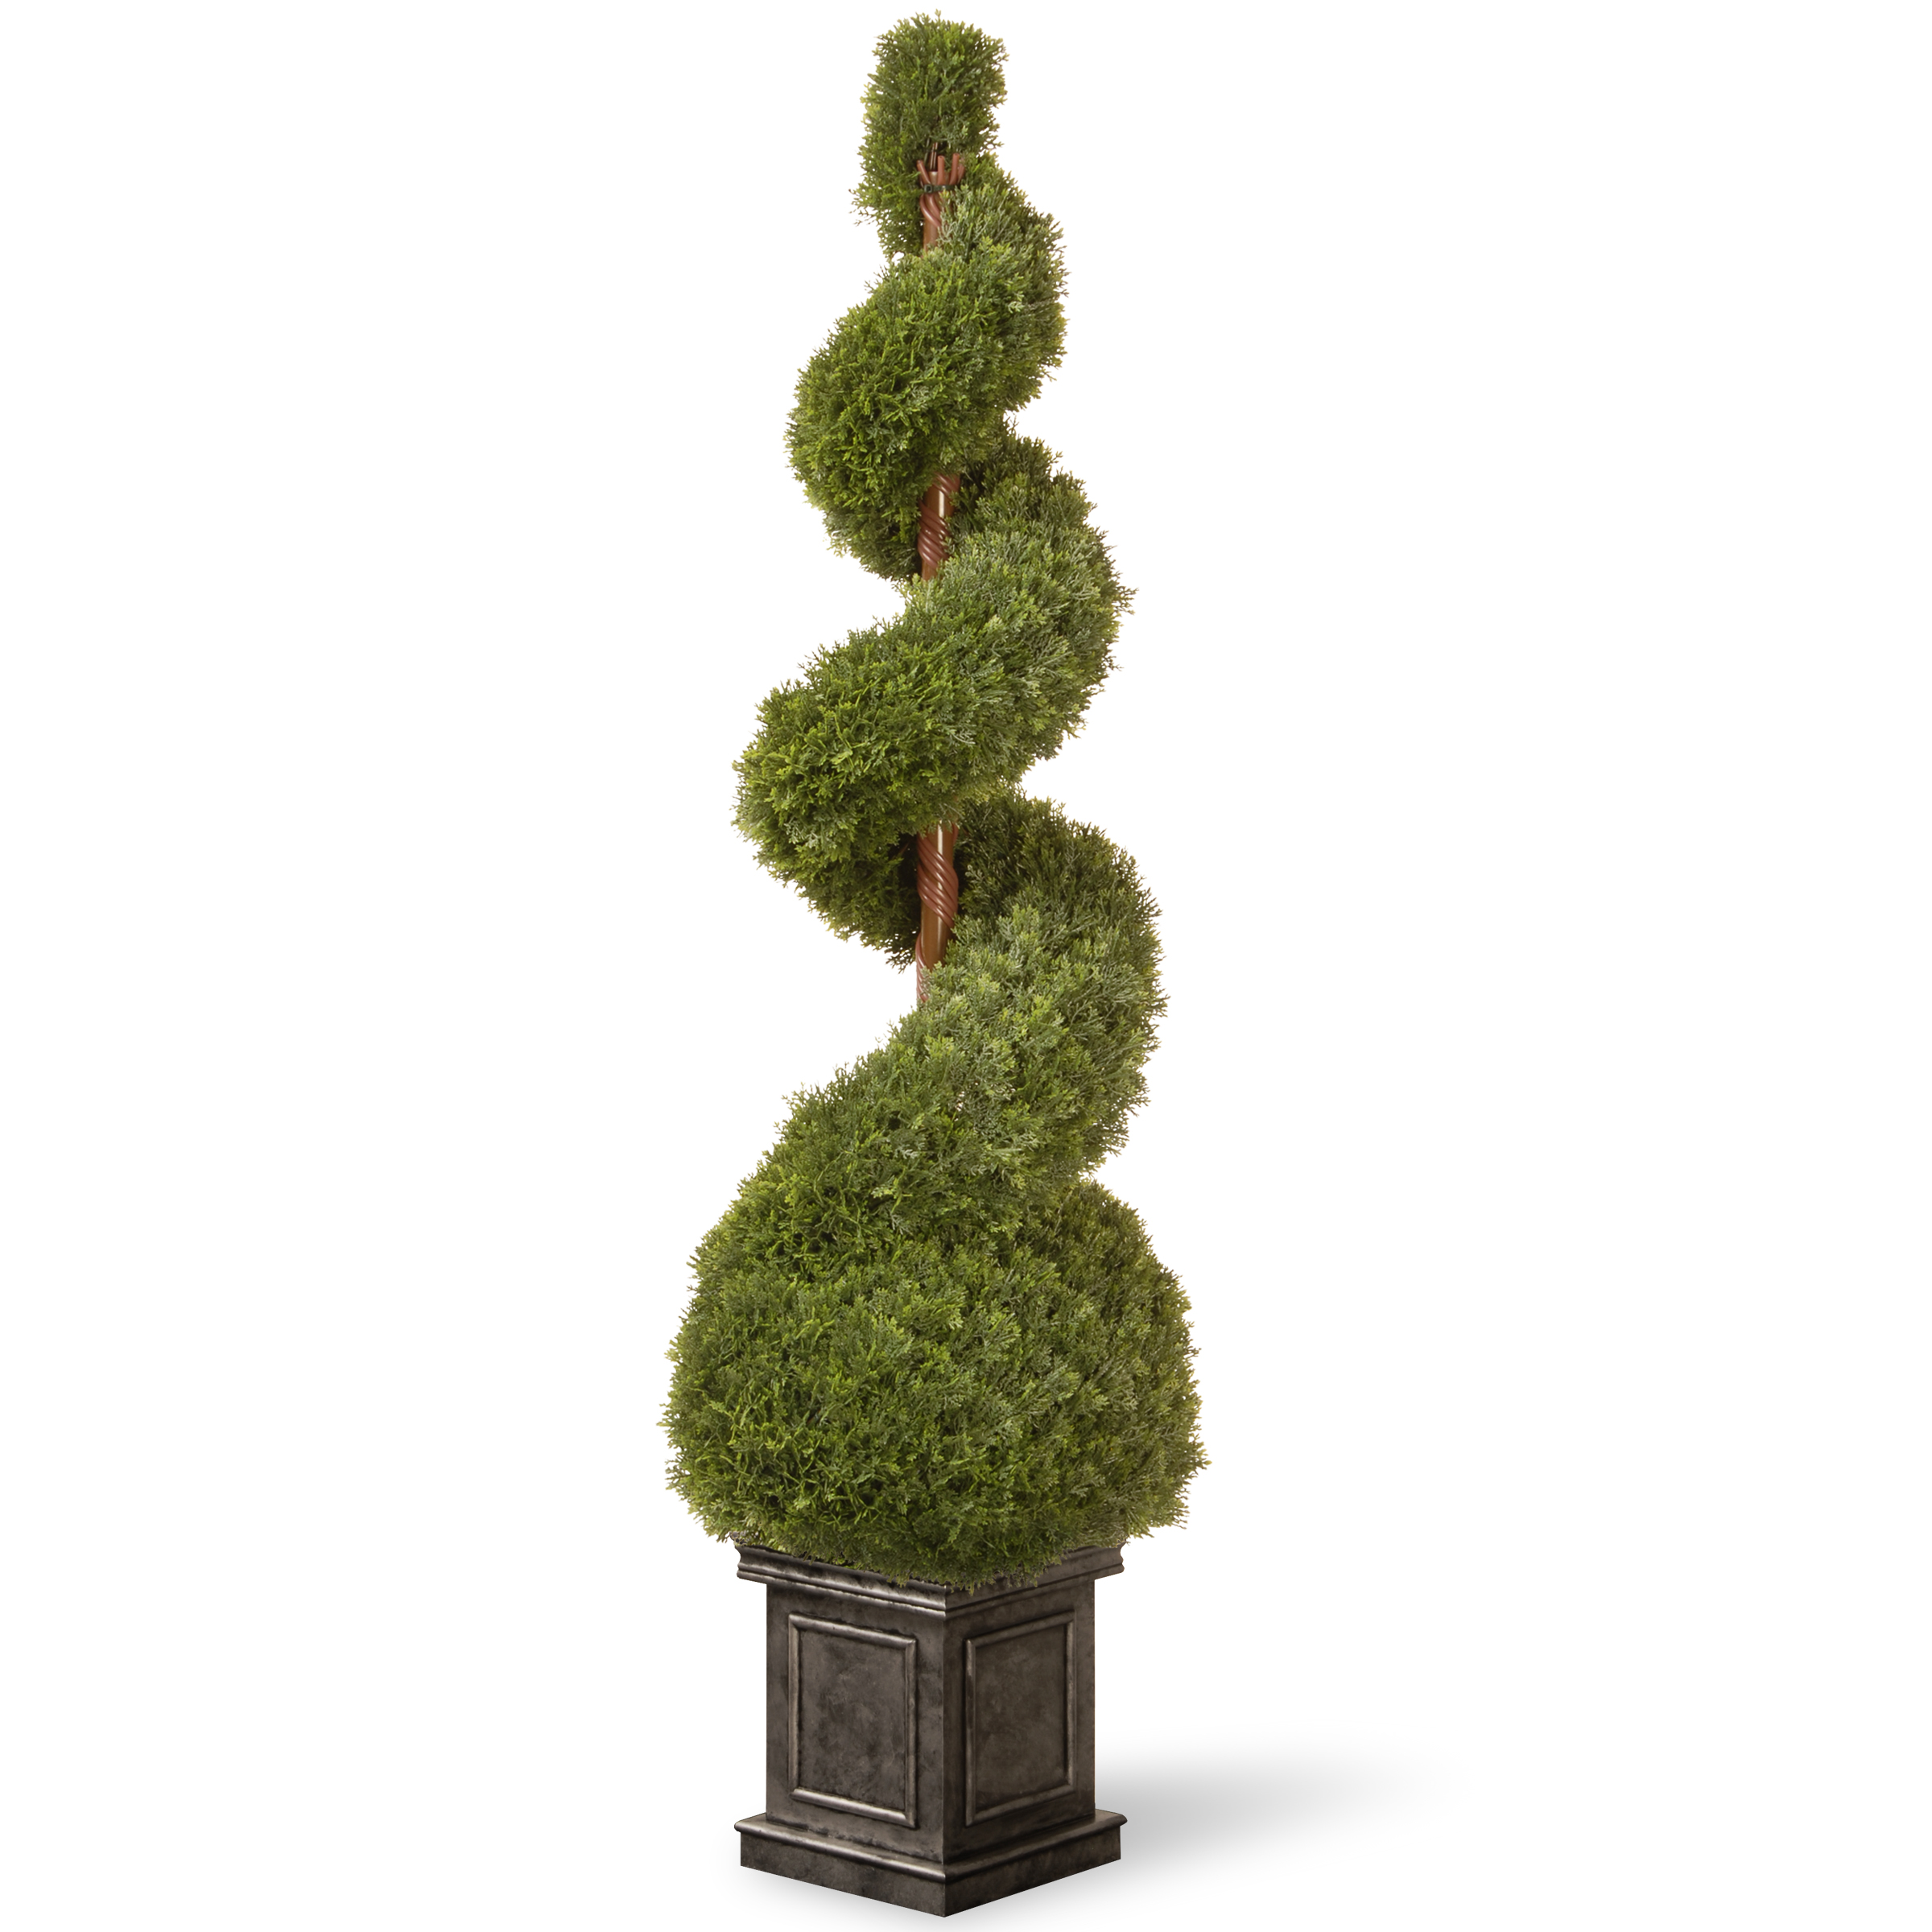 48" Artificial Cedar Topiary - image 1 of 3